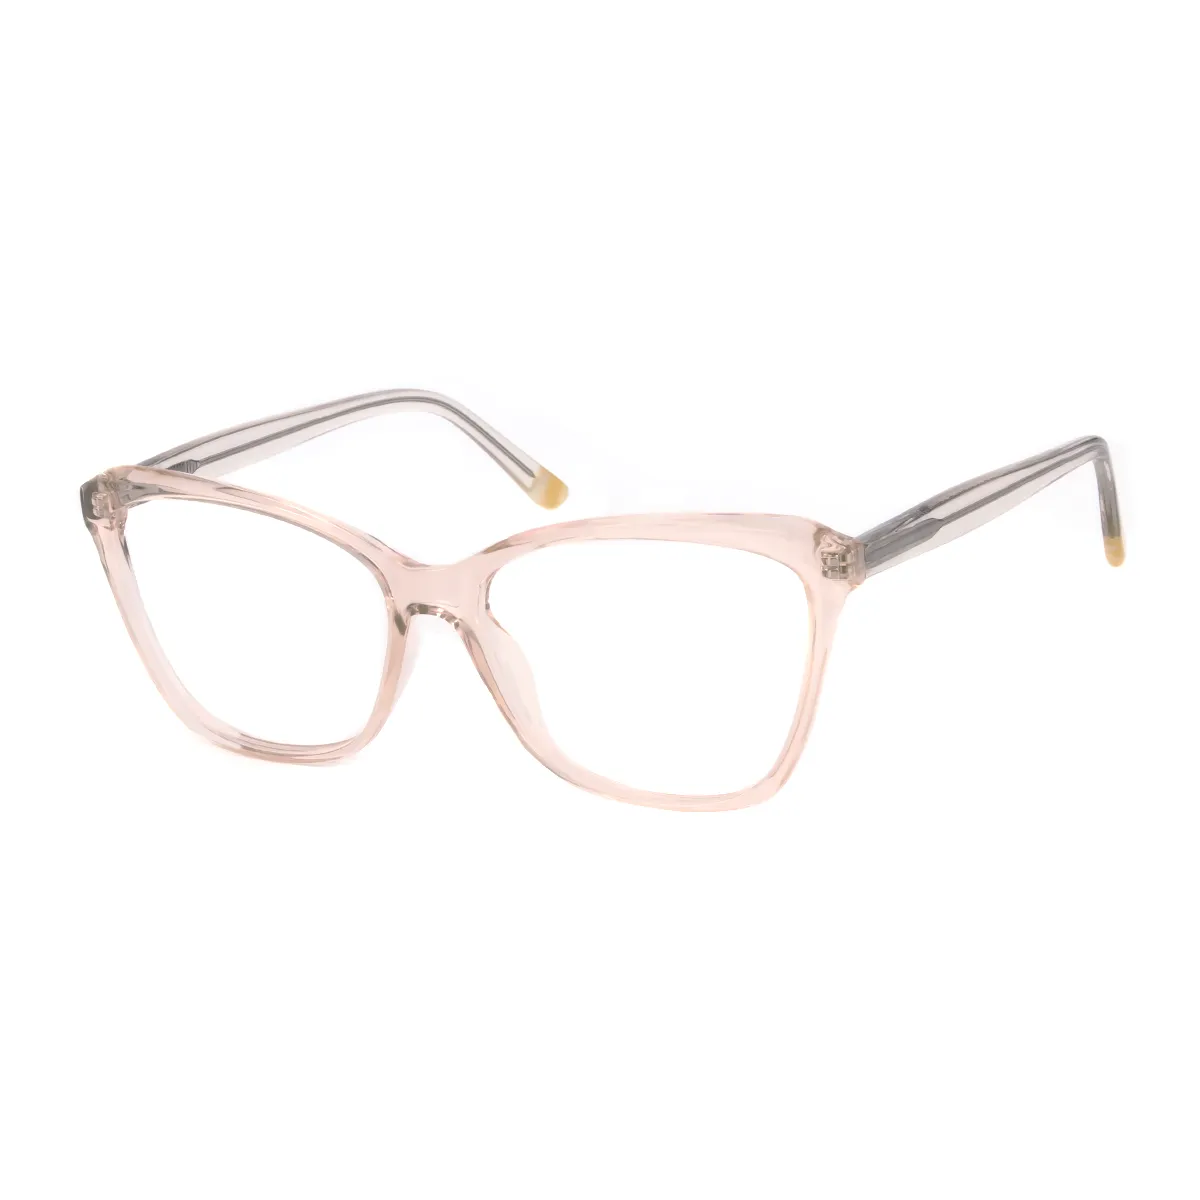 Rue - Square Translucent Glasses for Women